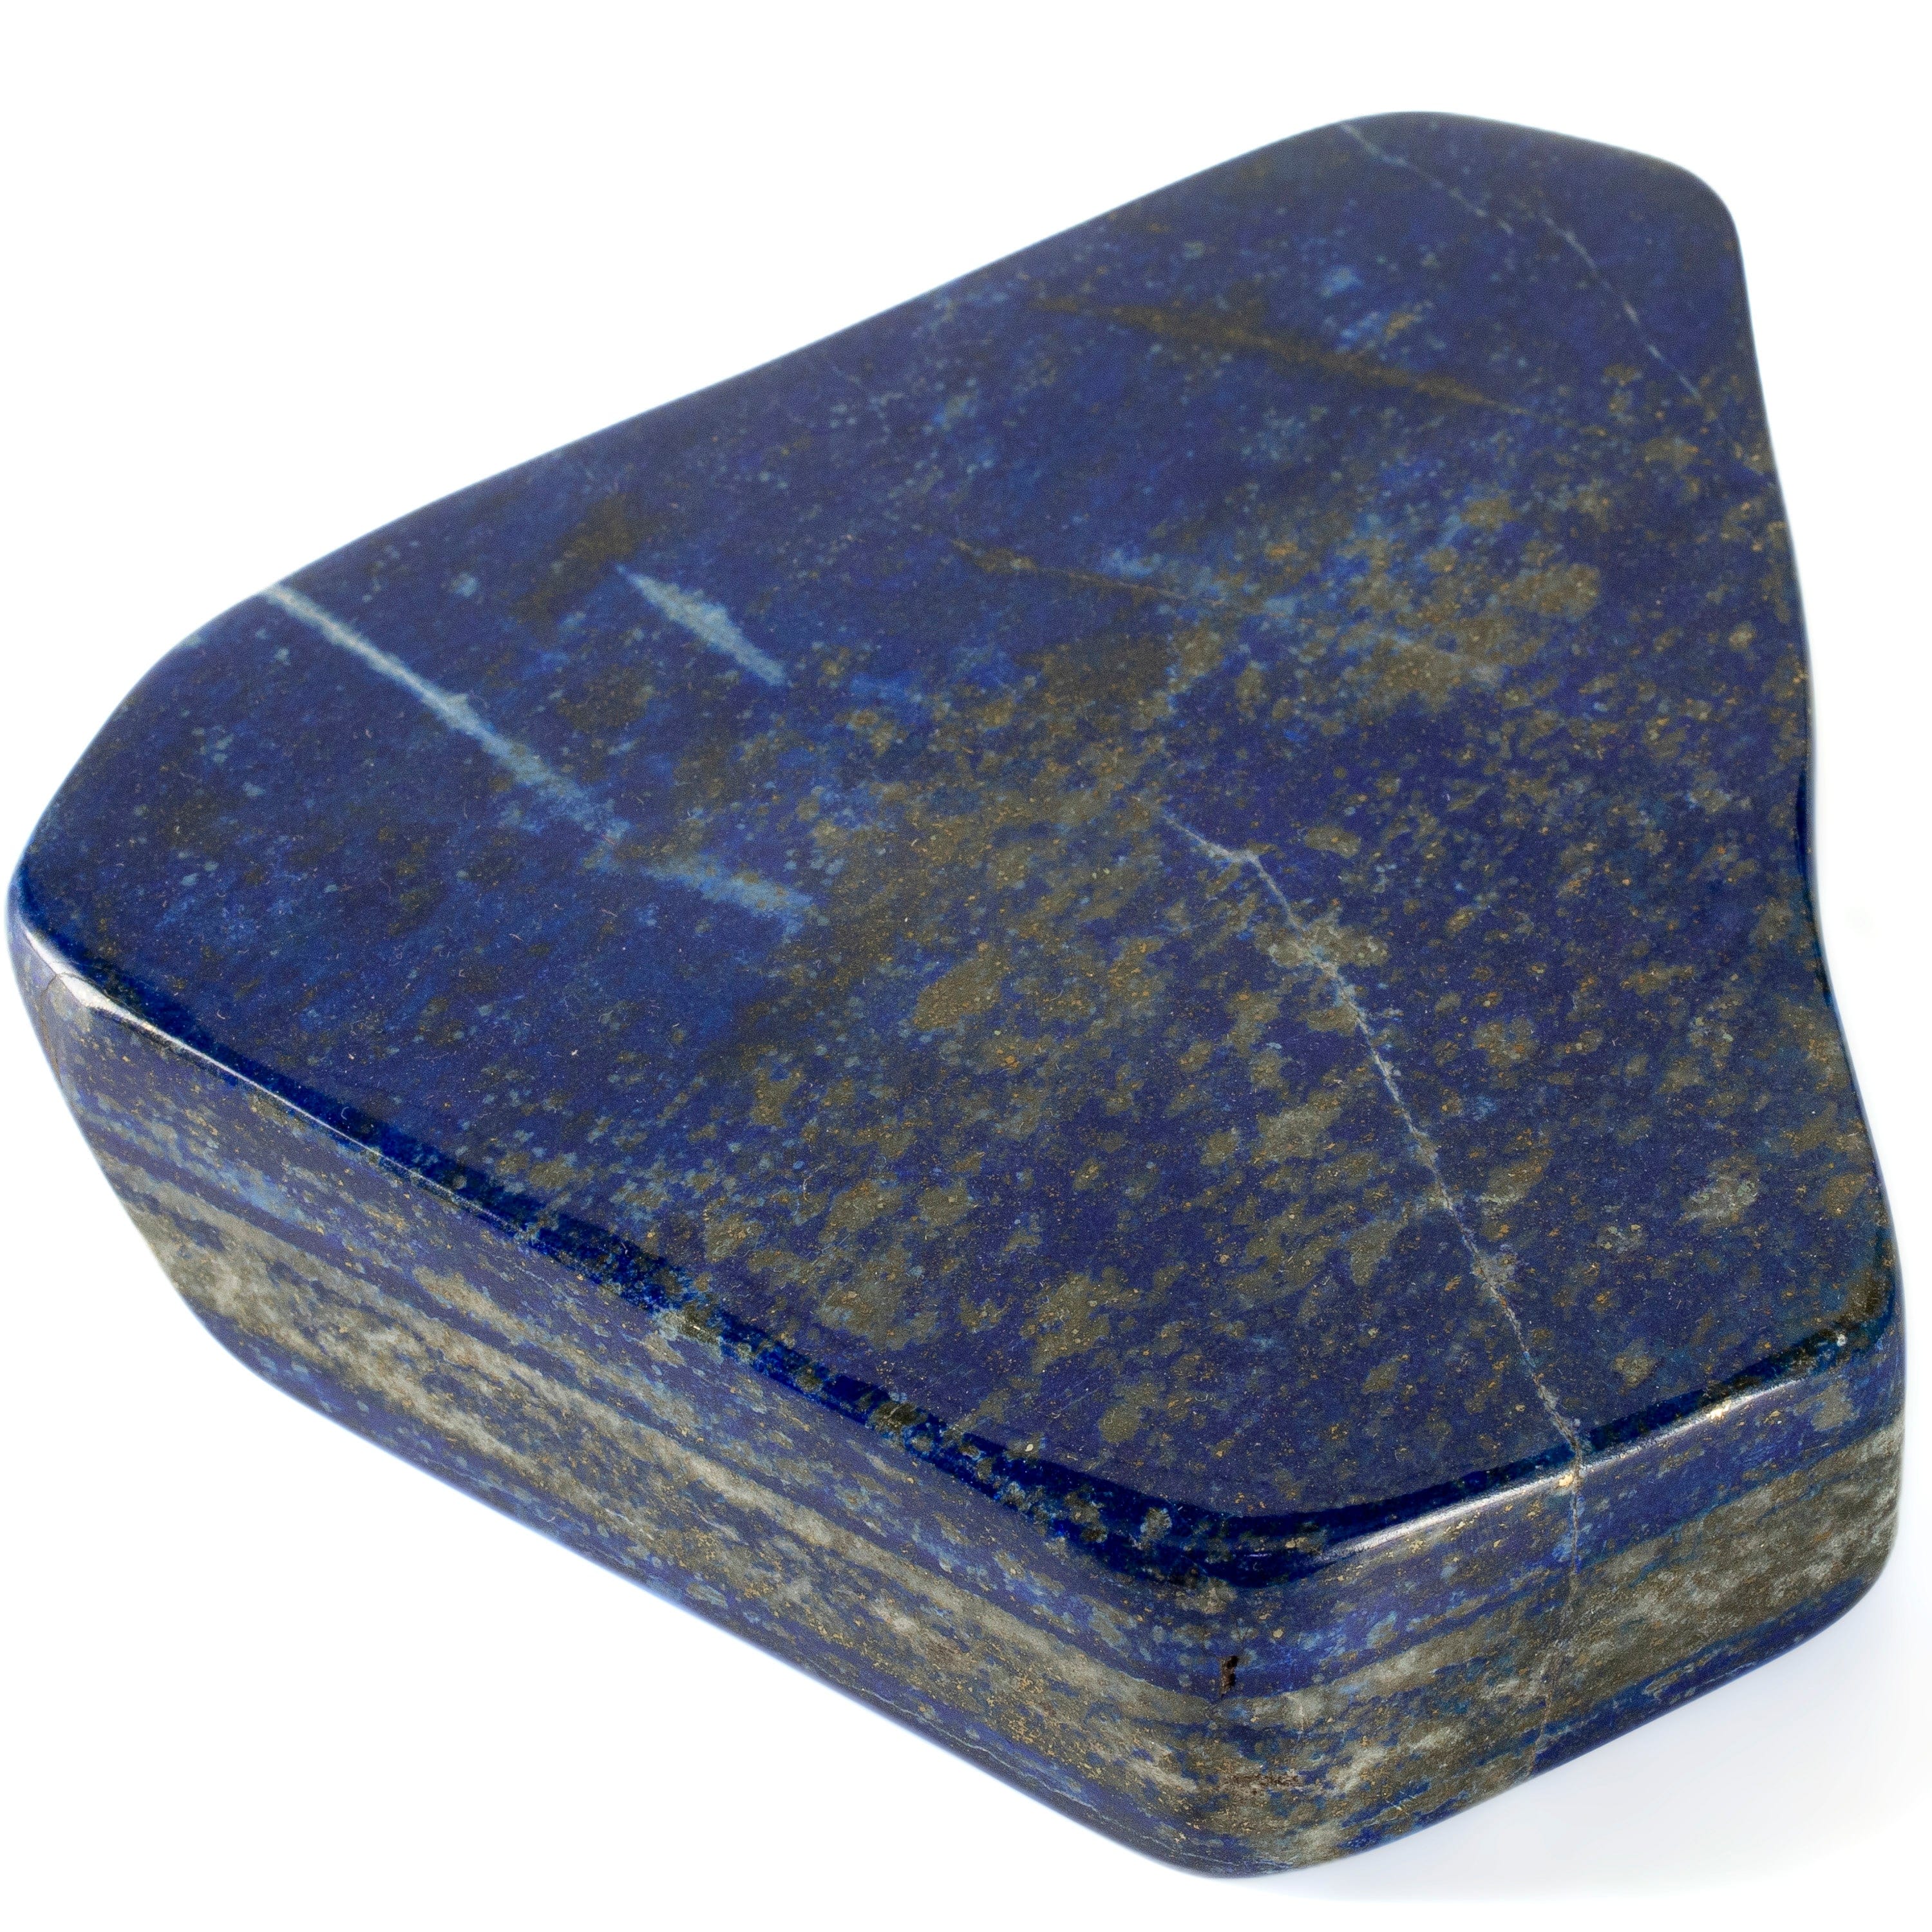 Kalifano Lapis Lapis Lazuli Freeform from Afghanistan - 7" / 1,840 grams LP1850.001